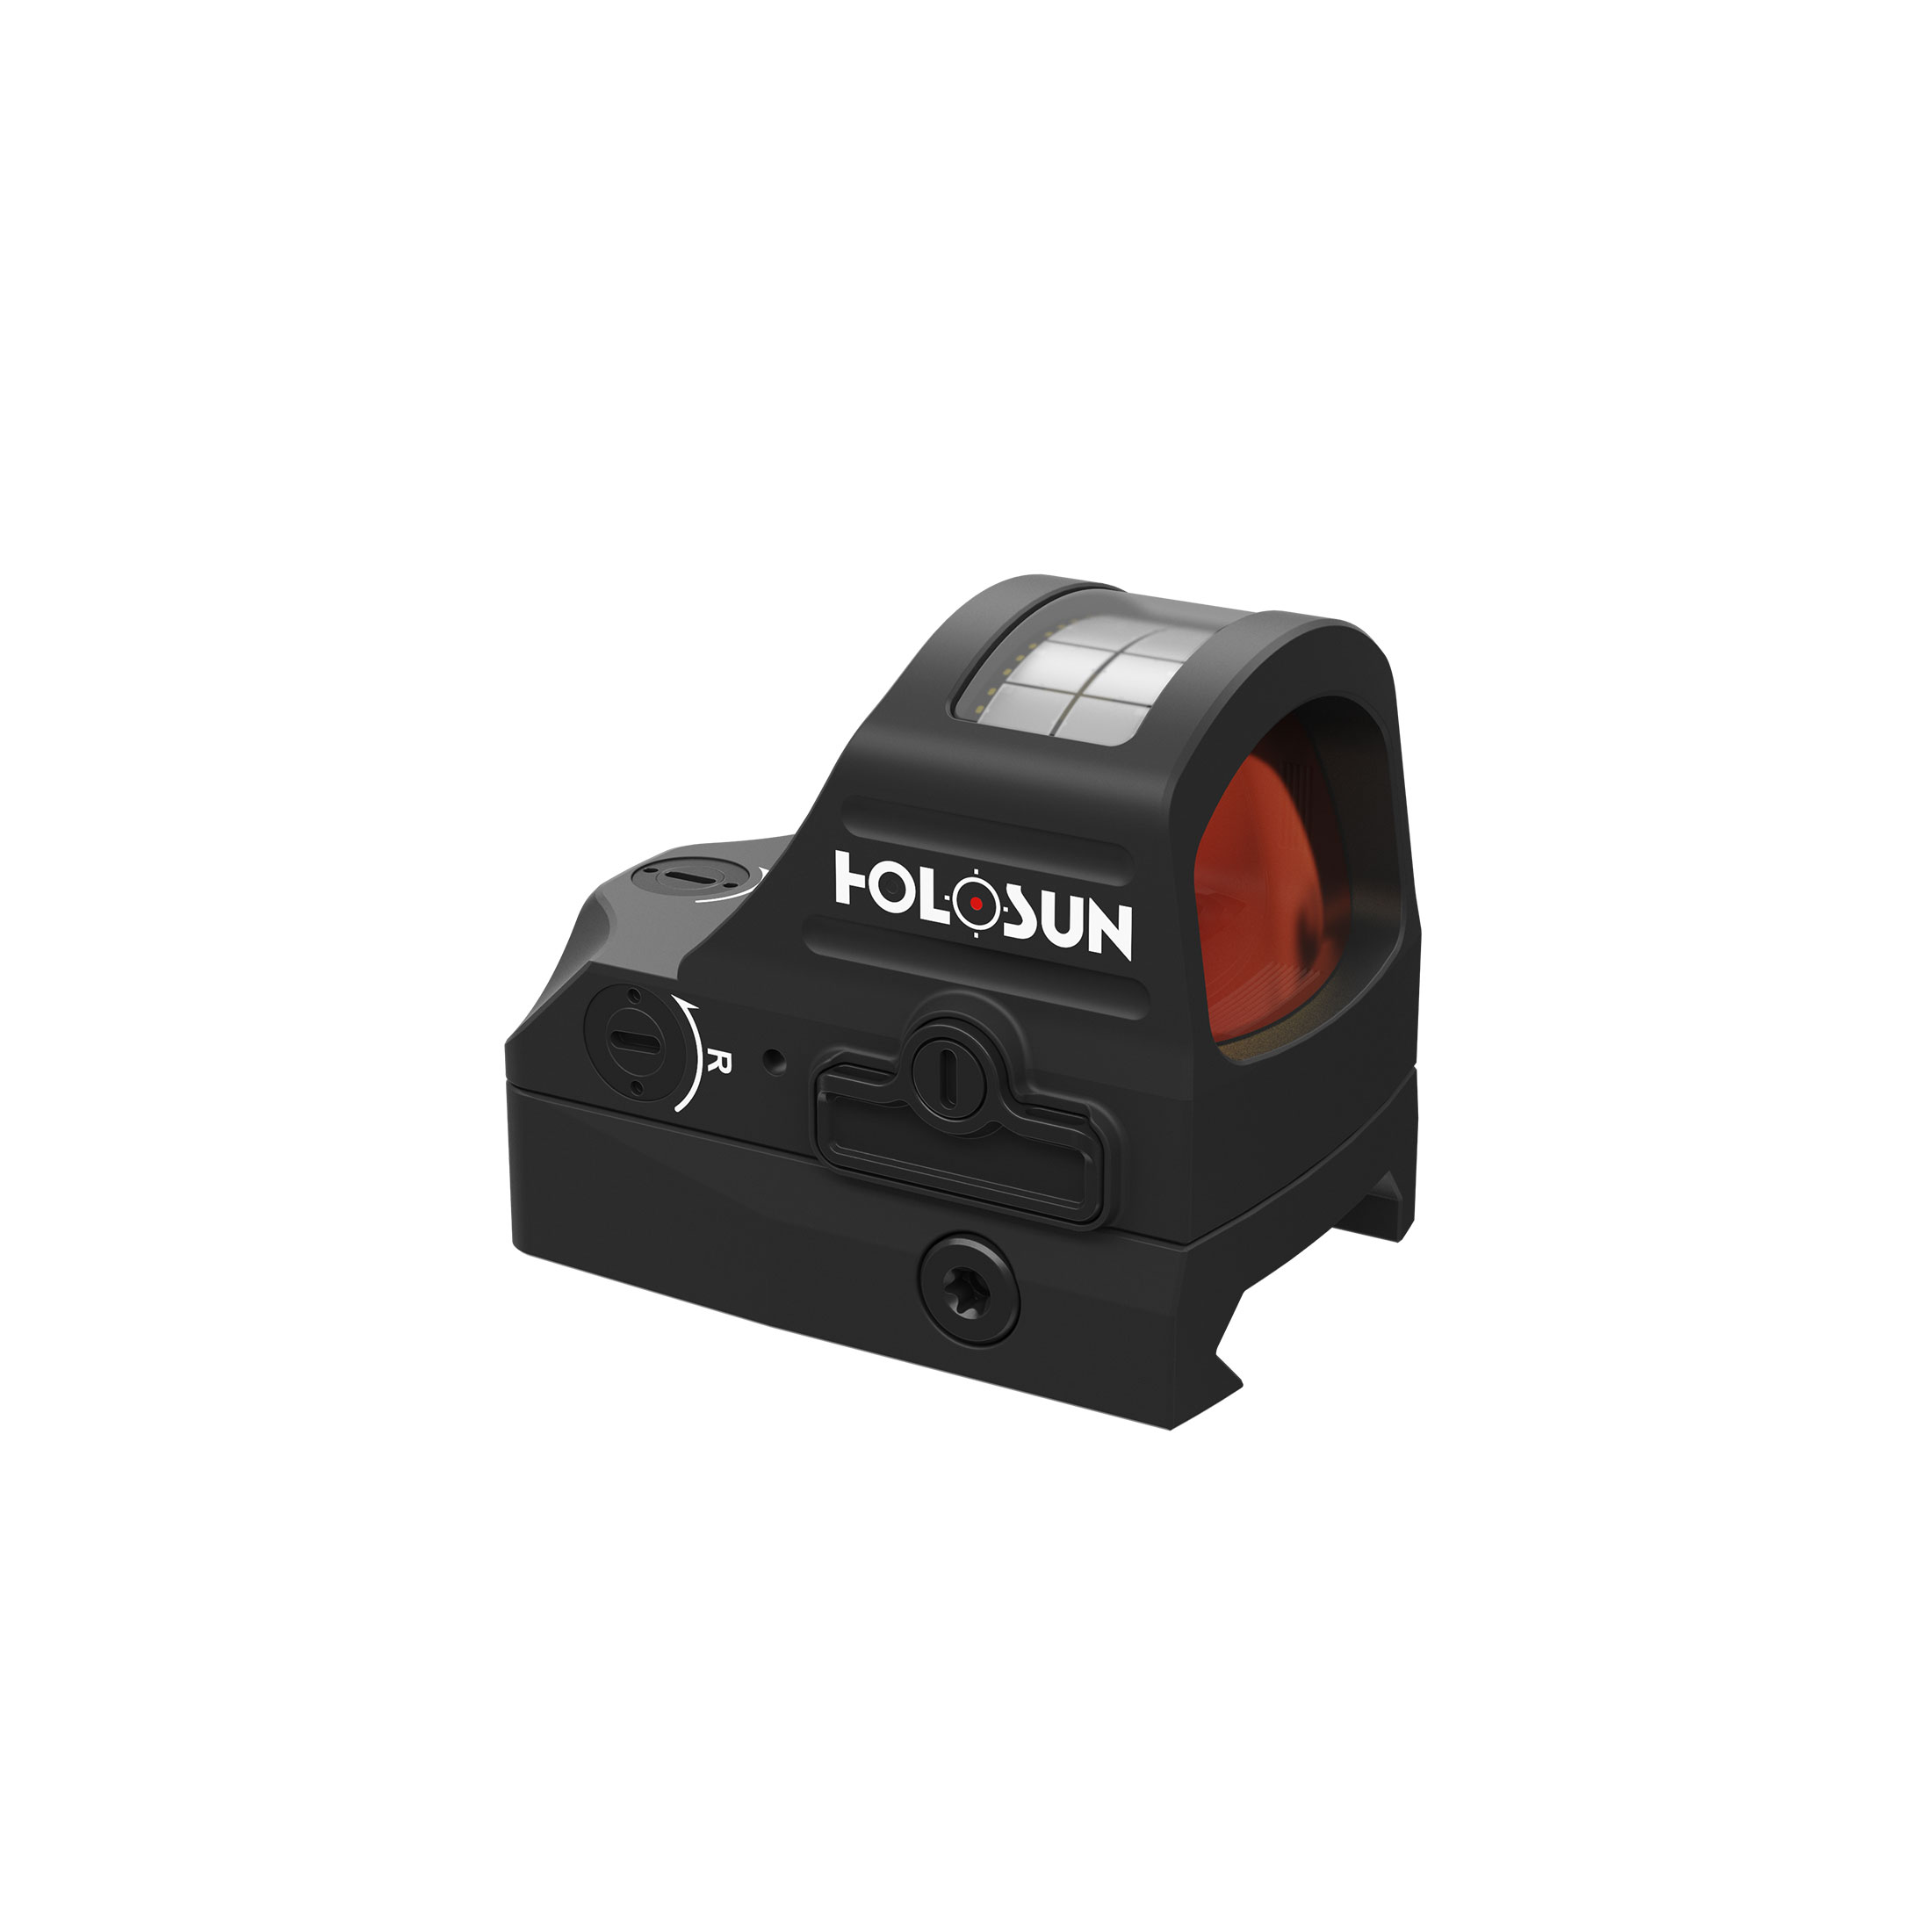 Holosun HS407C-V2 open reflex red dot sight 2MOA dot reticle solar cell, black, Picatinny/Weaver ra…